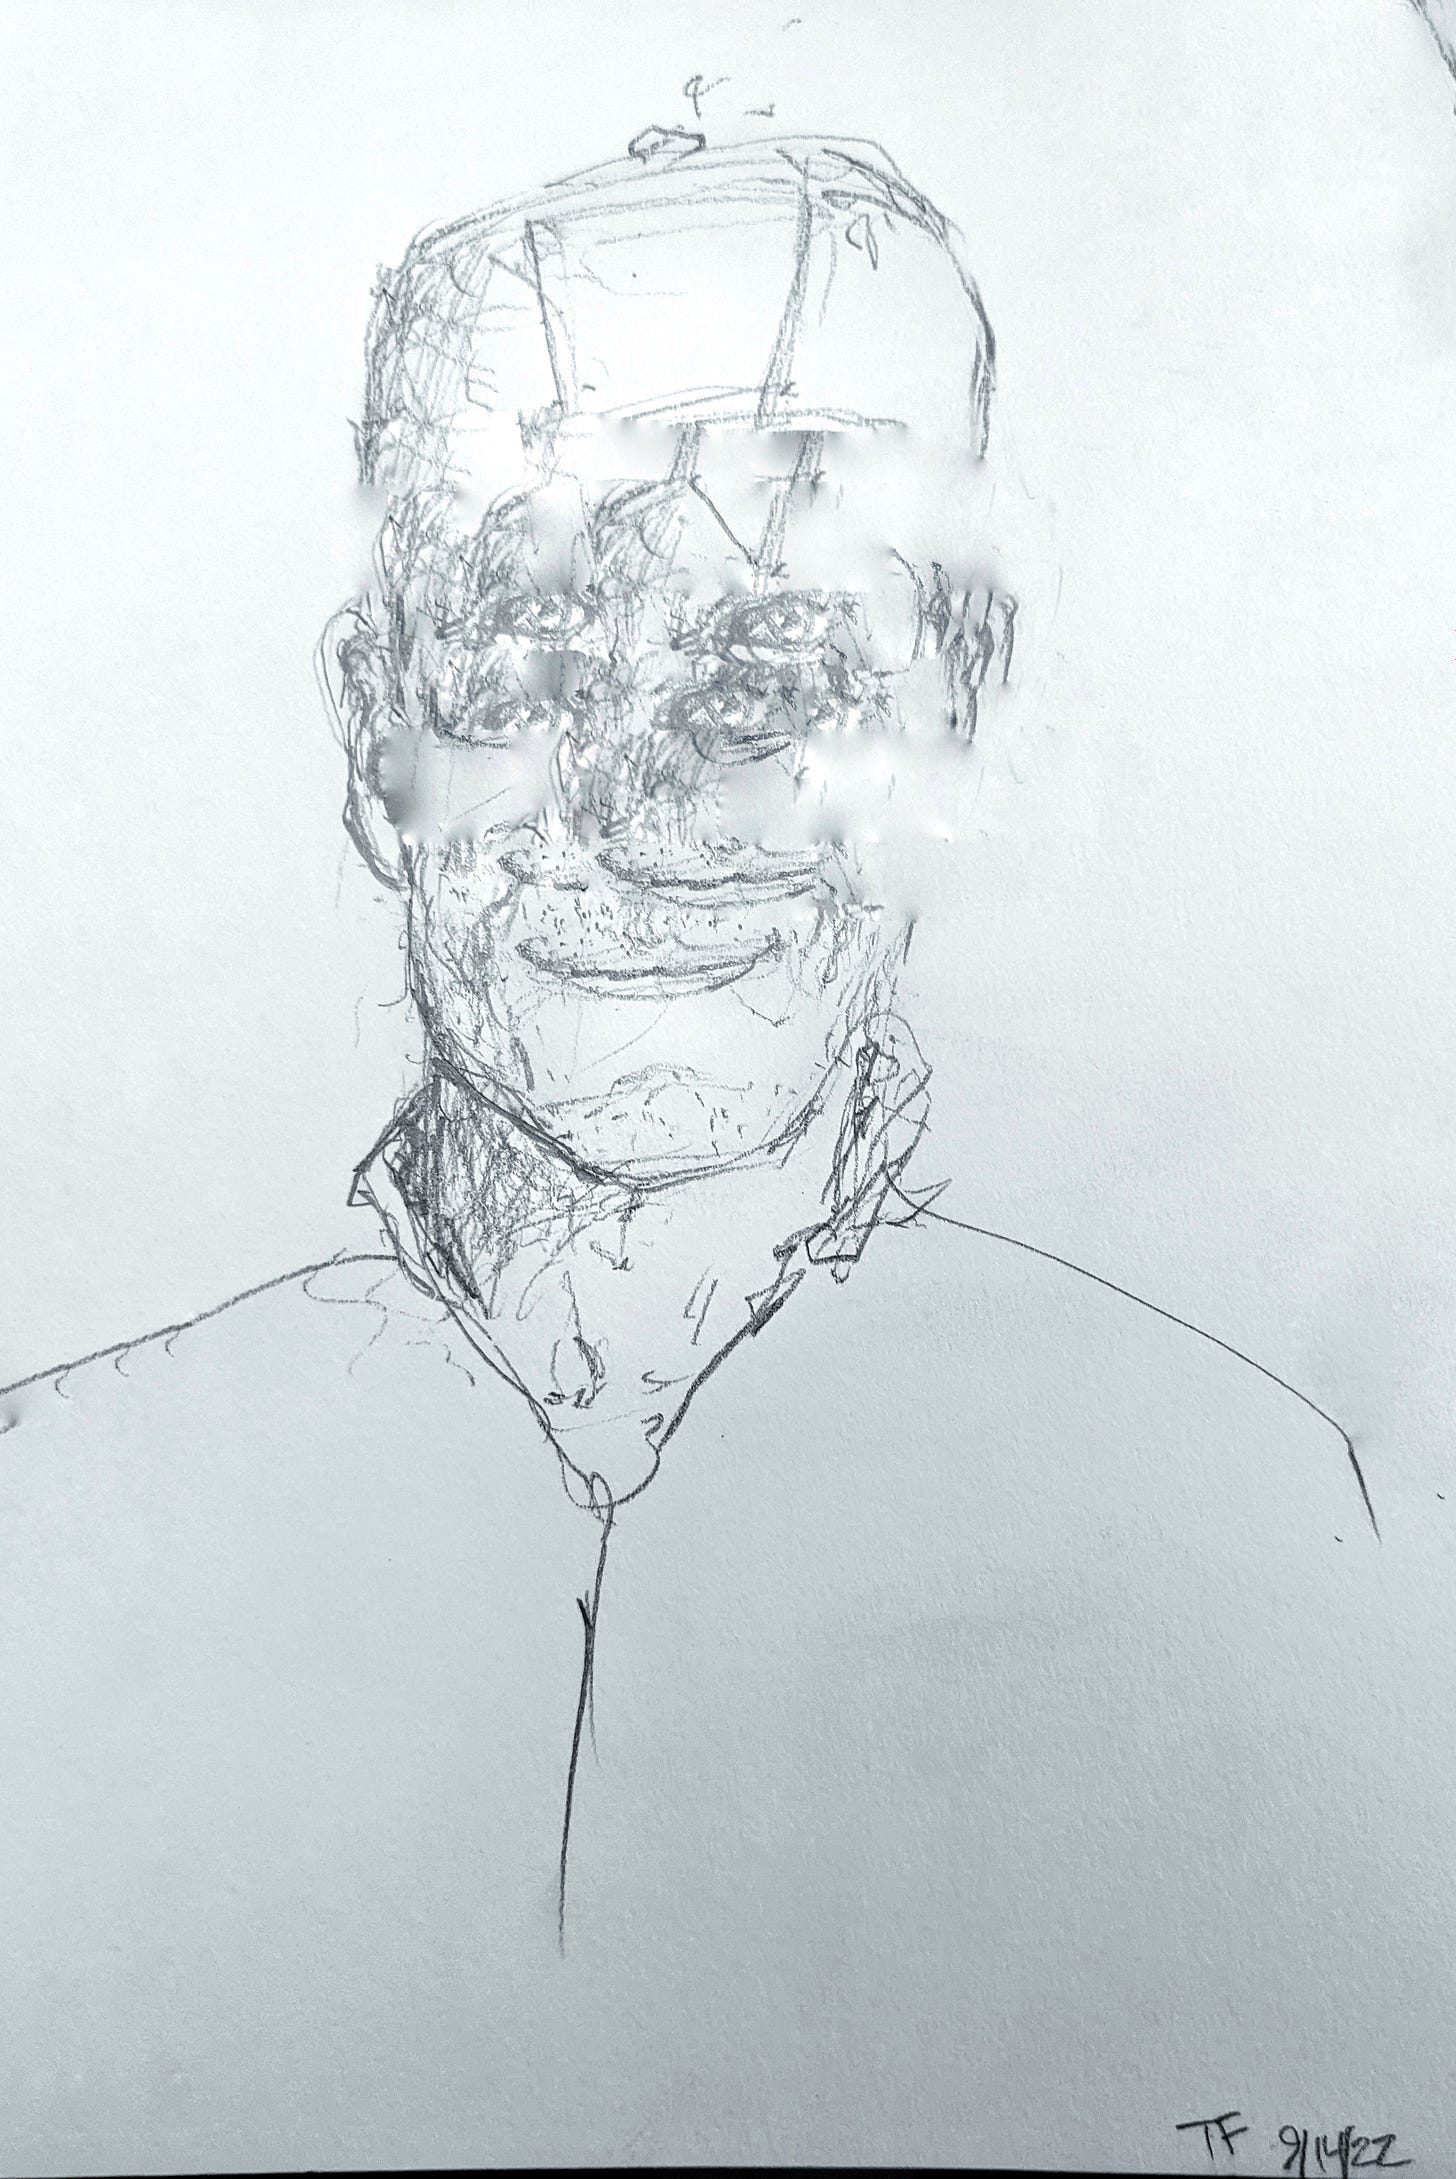 Pencil sketch of man with crazy eyes